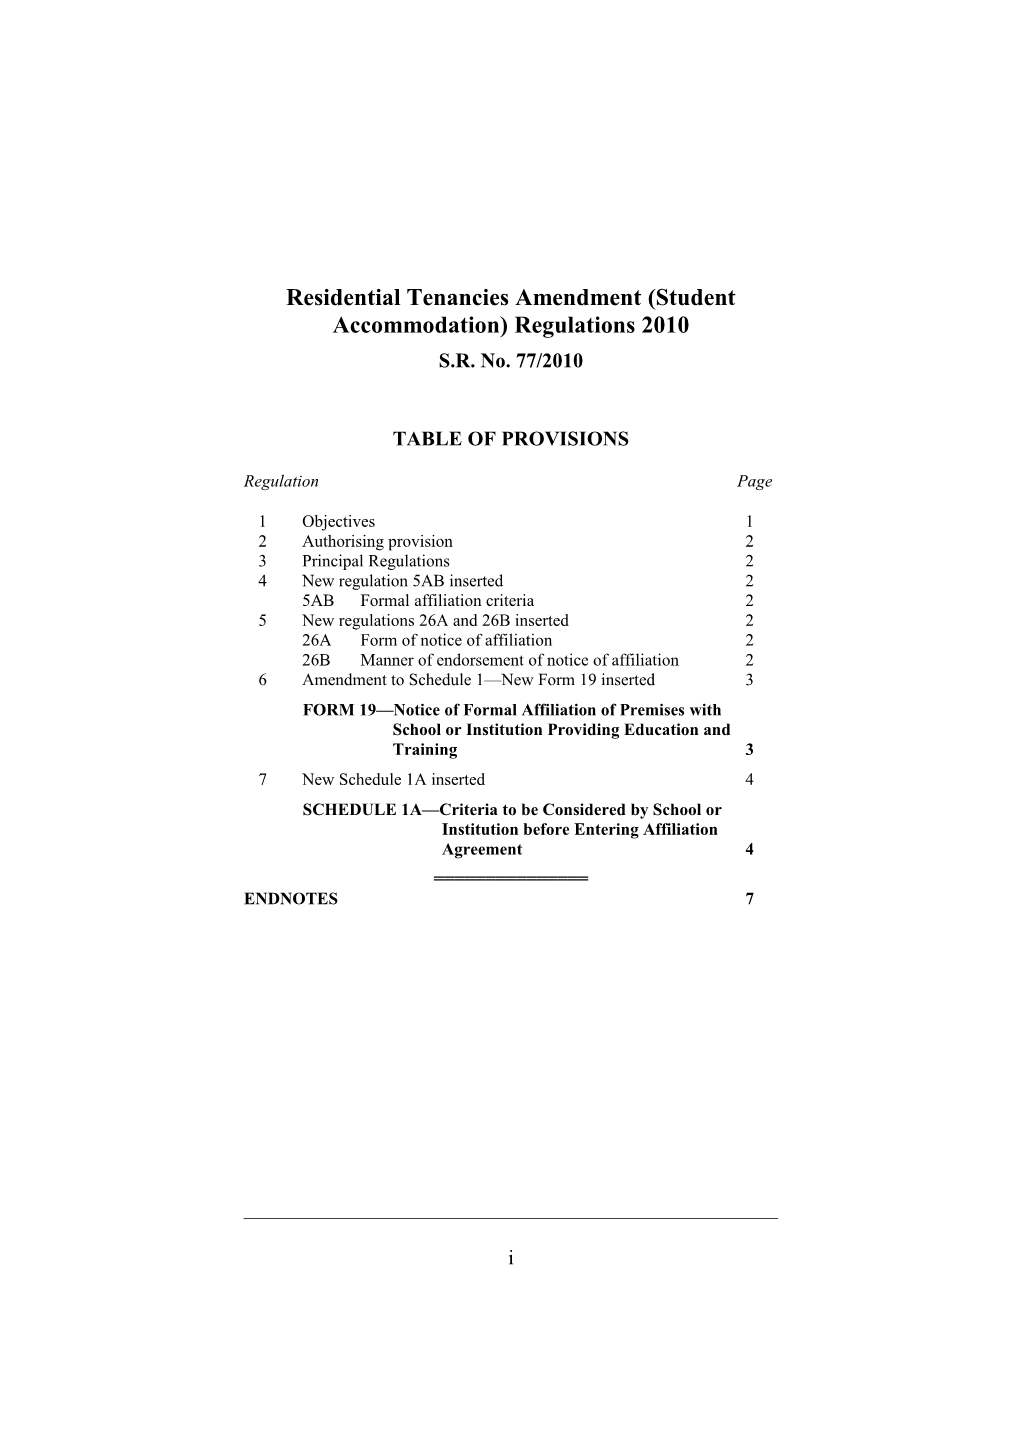 Residential Tenancies Amendment (Student Accommodation) Regulations 2010